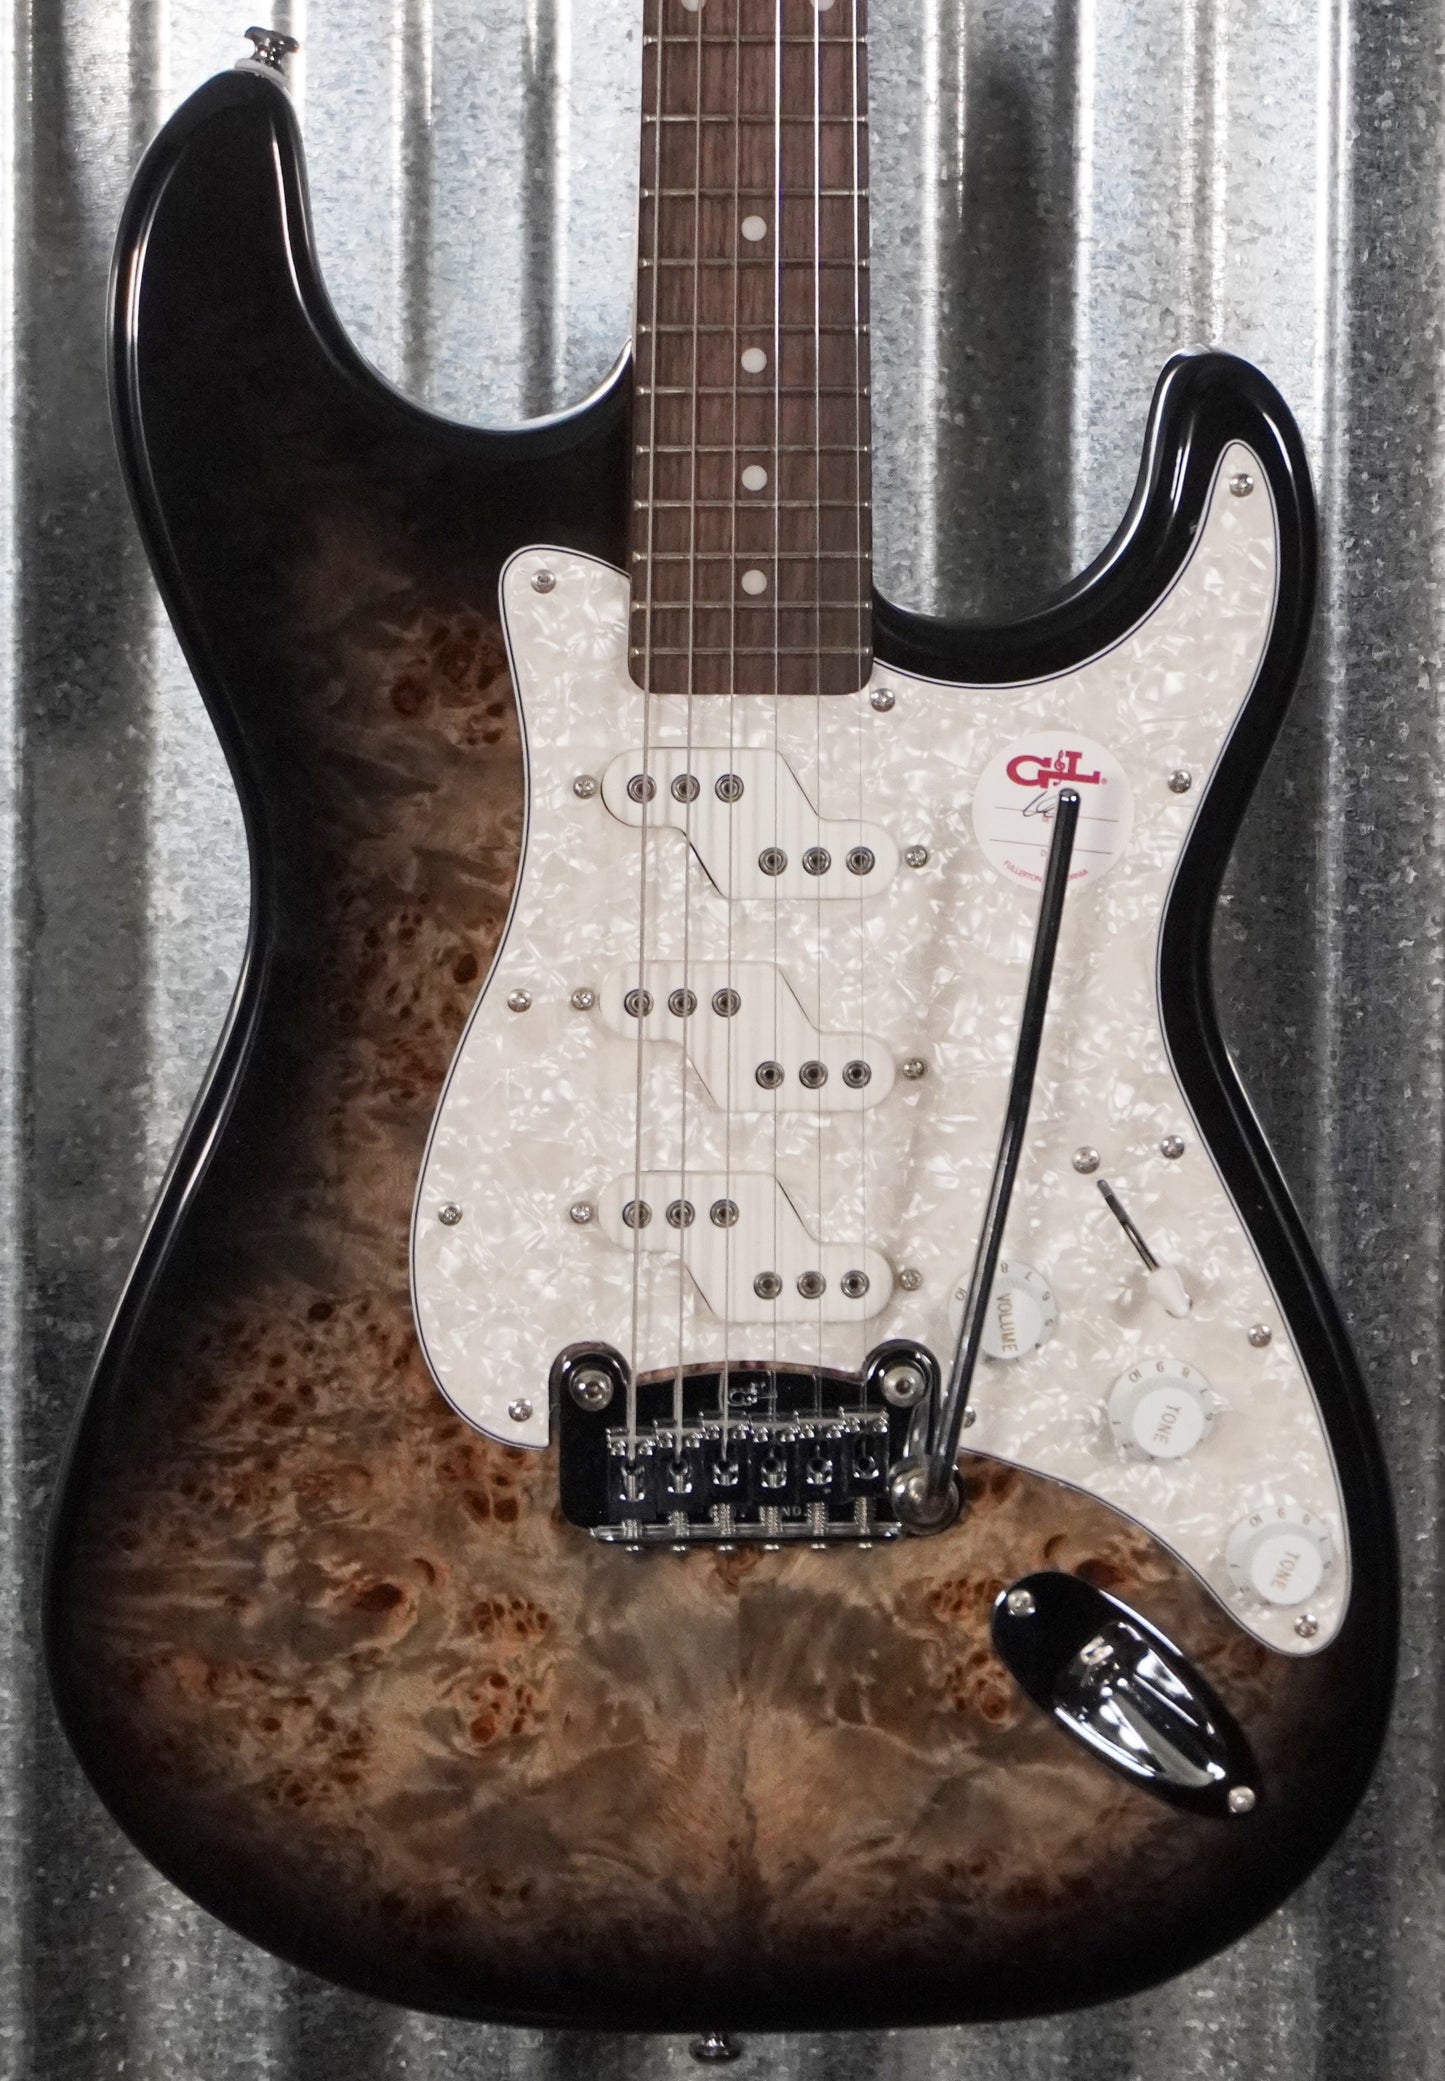 G&L Tribute Comanche Limited Edition Blackburst Burl Guitar #0793